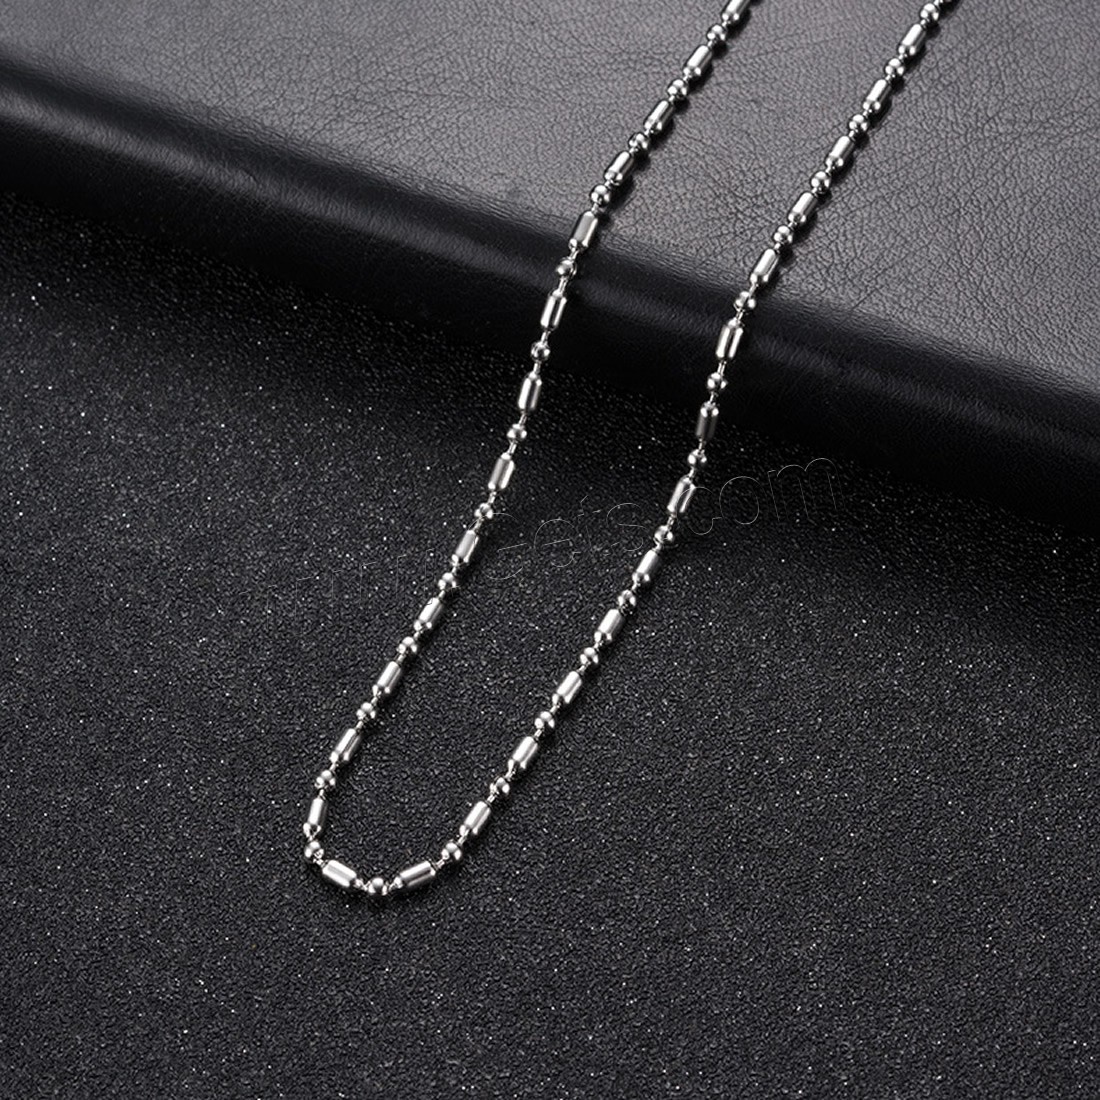 Titanium Steel Chain Necklace, Unisex & different size for choice, original color, Length:Approx 21.6 Inch, Approx 23.6 Inch, Approx 25.5 Inch, Sold By Strand